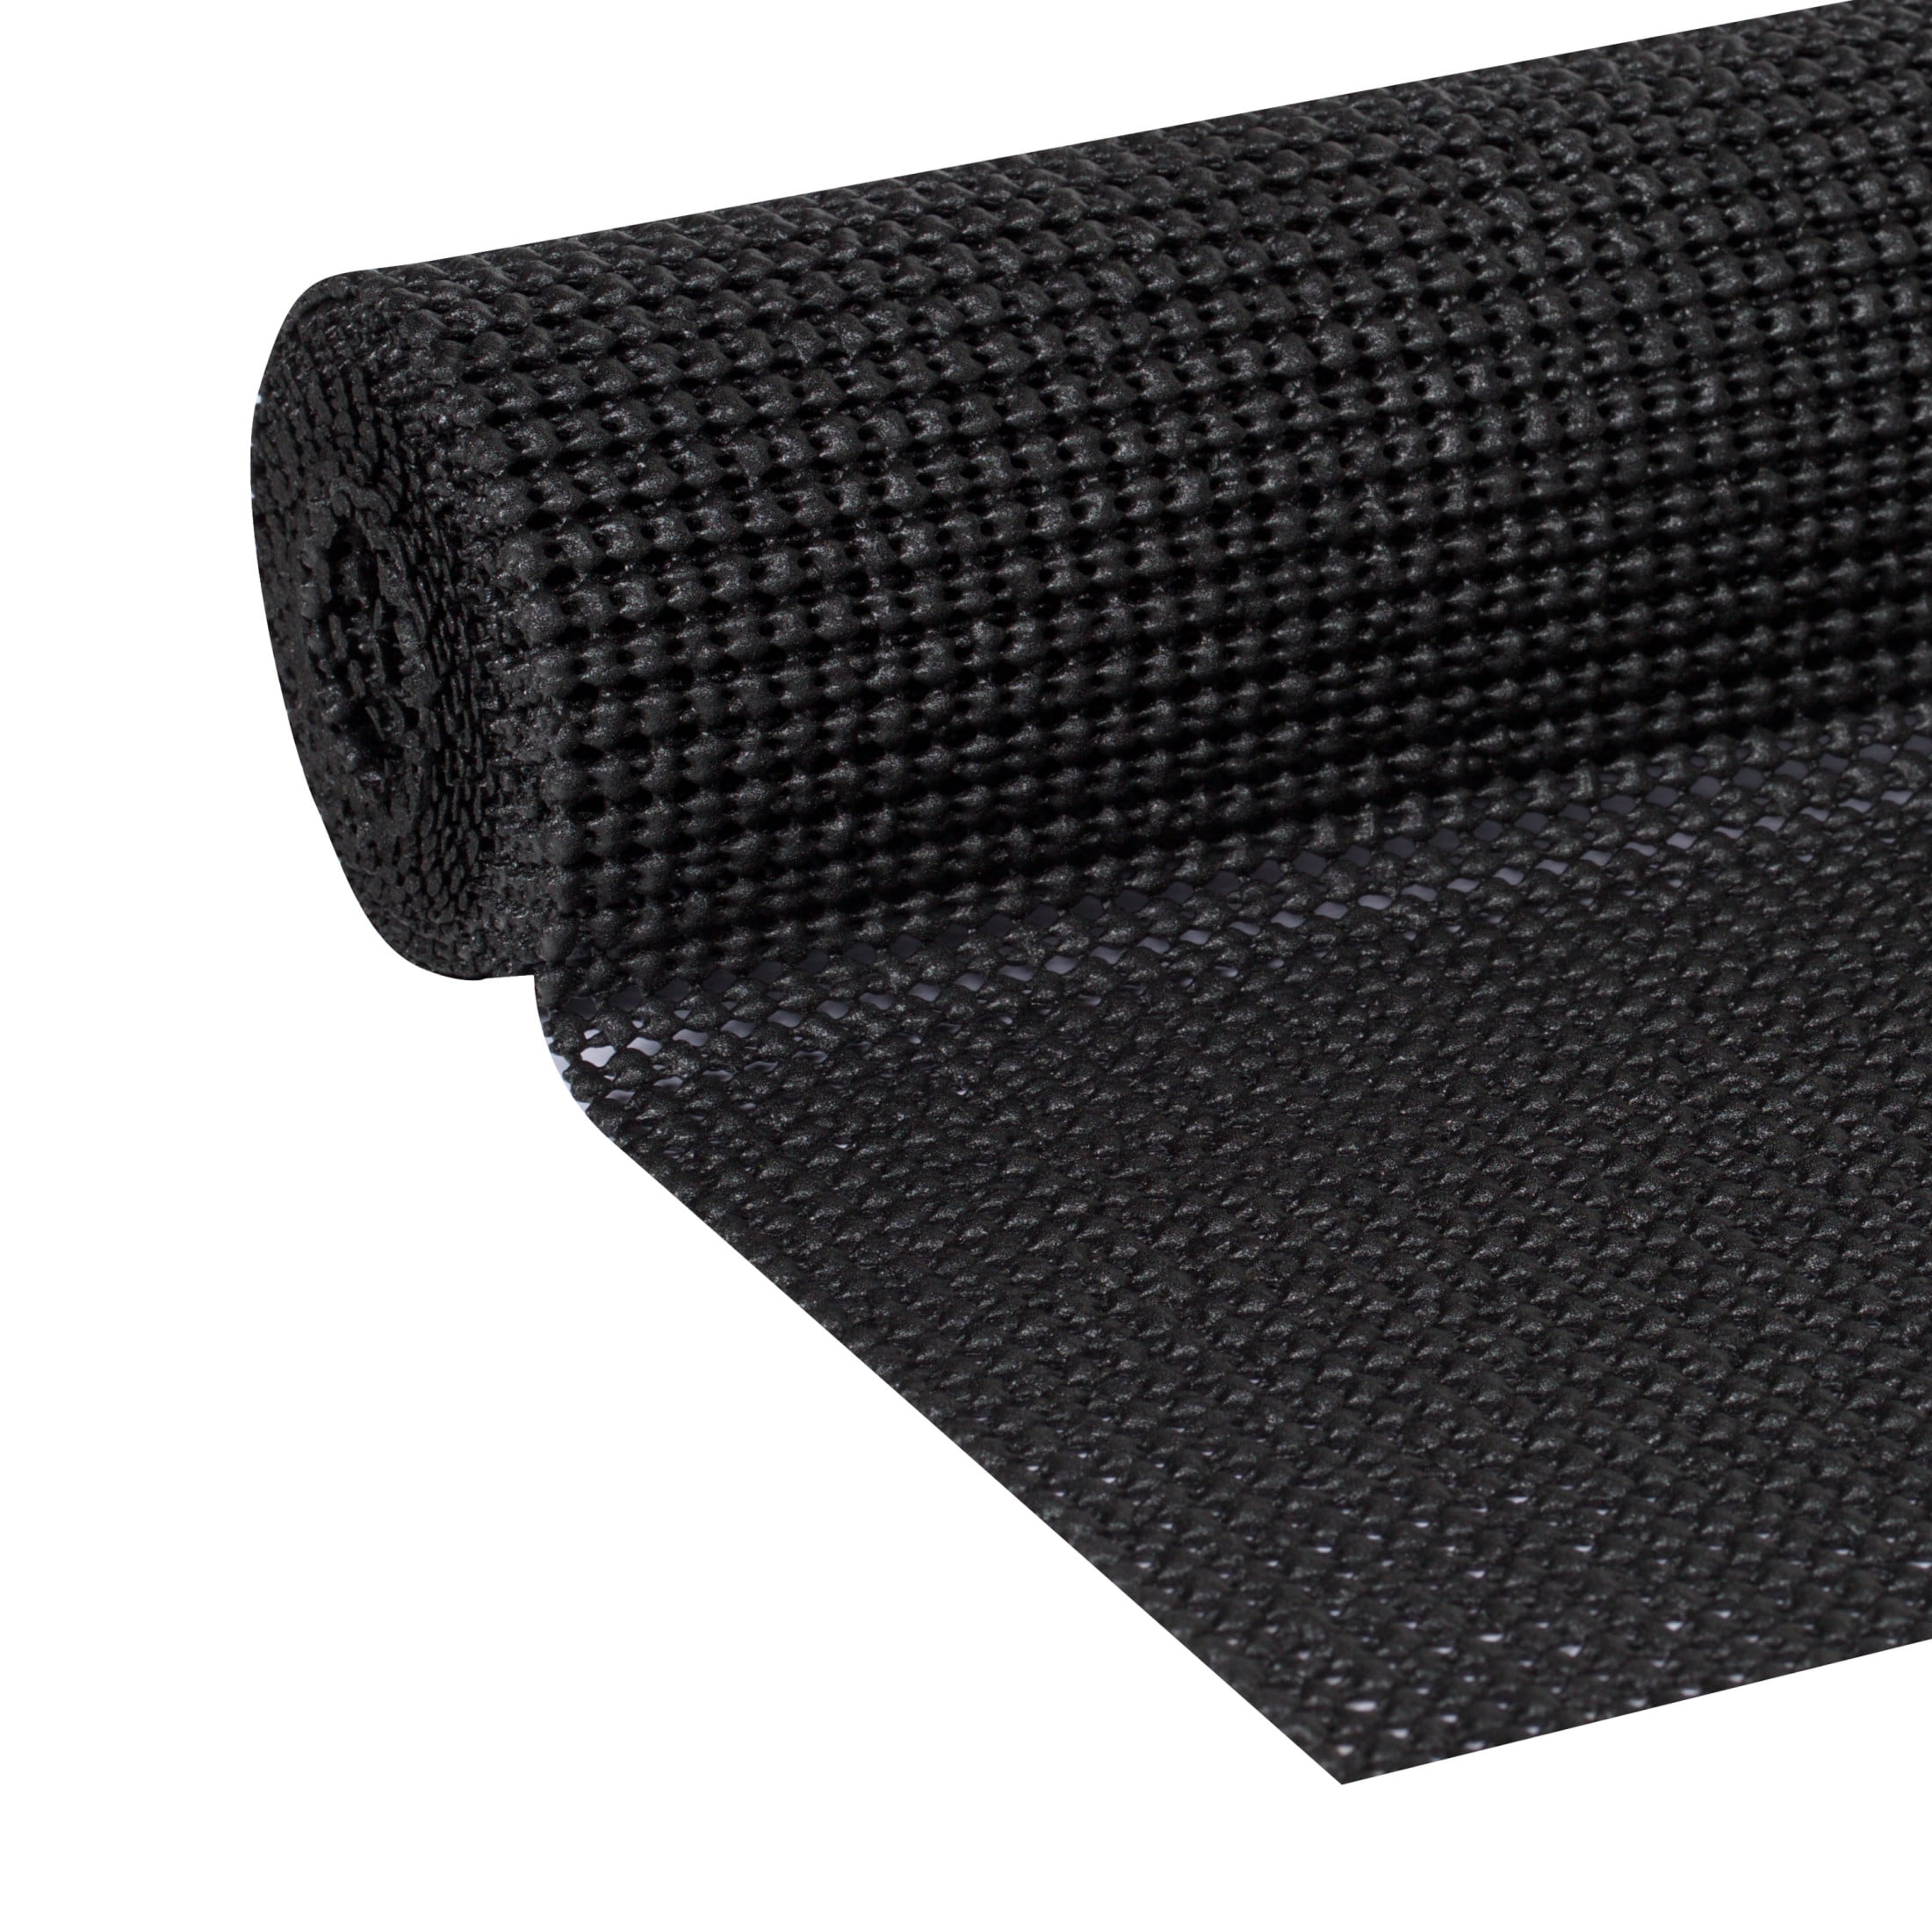 Kolox Premium Drawer And Shelf Liner, Non Adhesive, Black 20in. x 30ft.